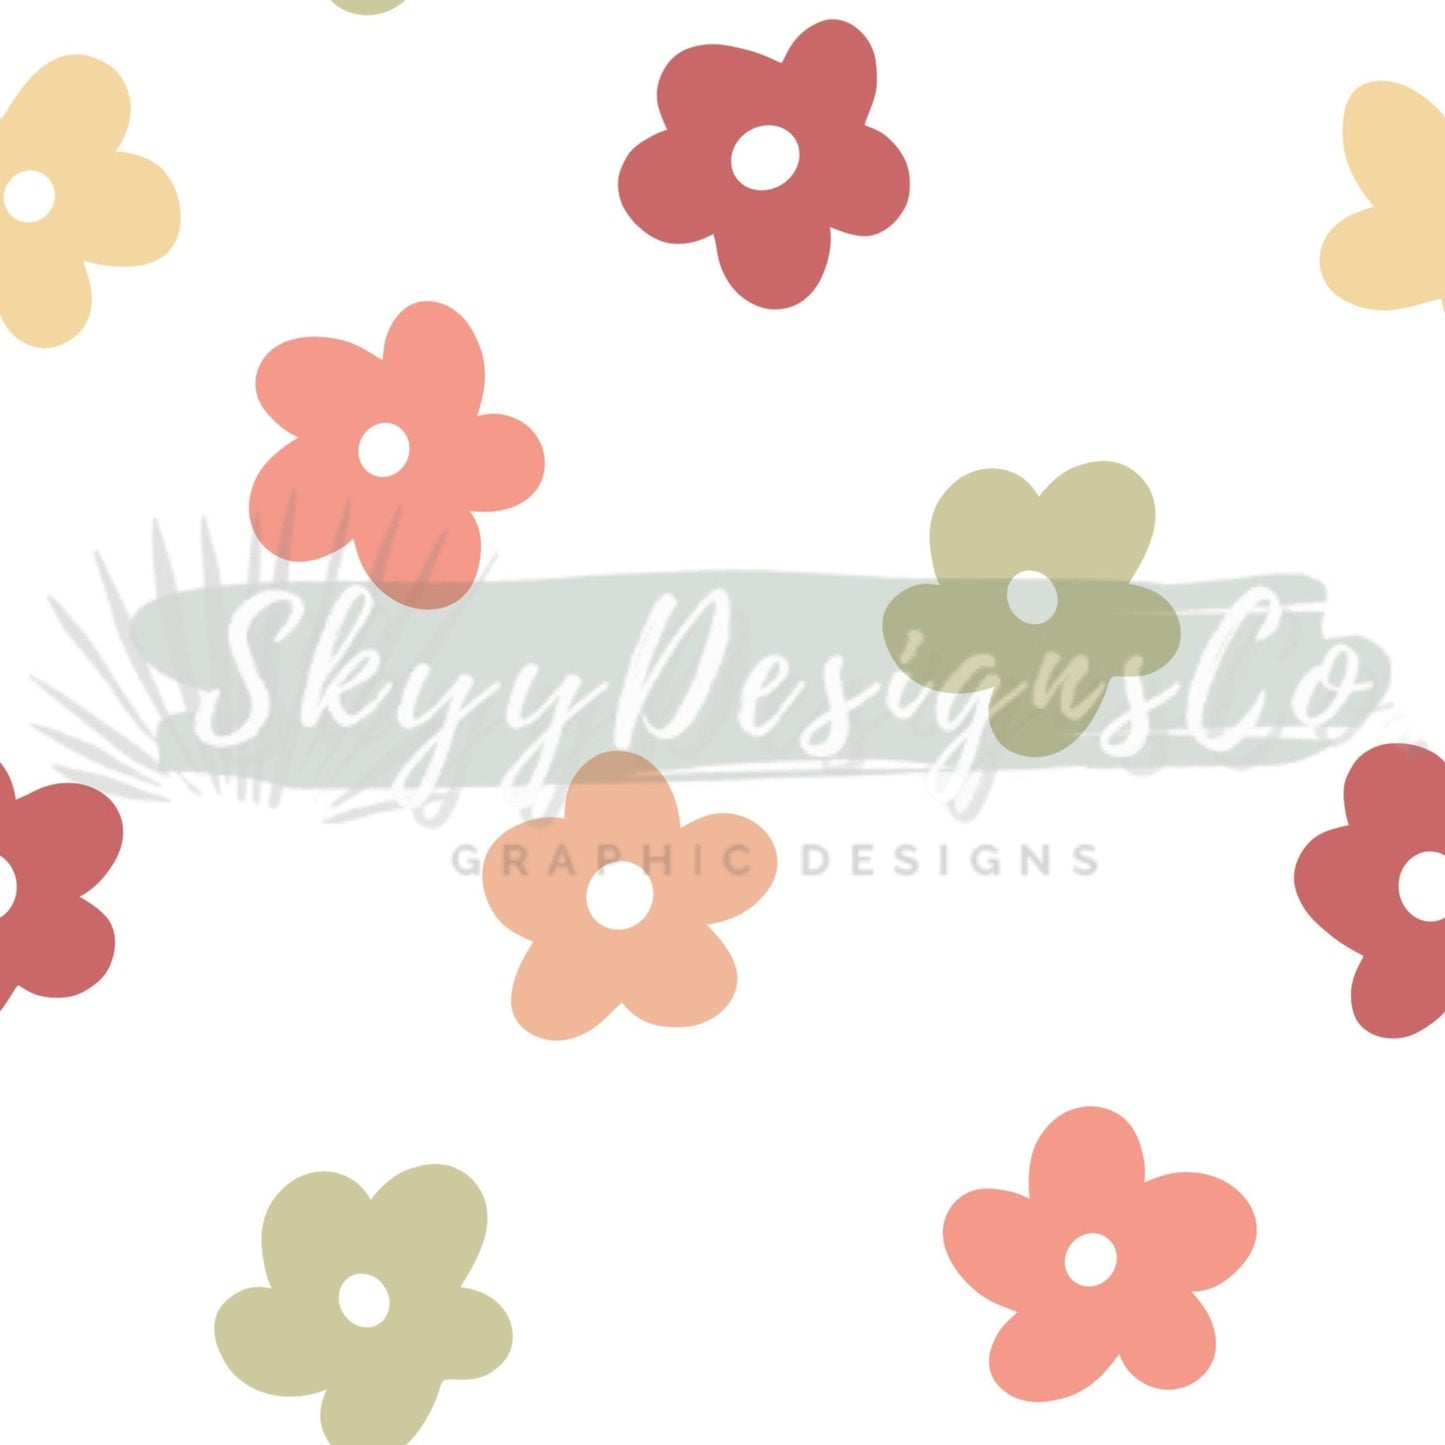 colorful retro daisy seamless pattern - SkyyDesignsCo